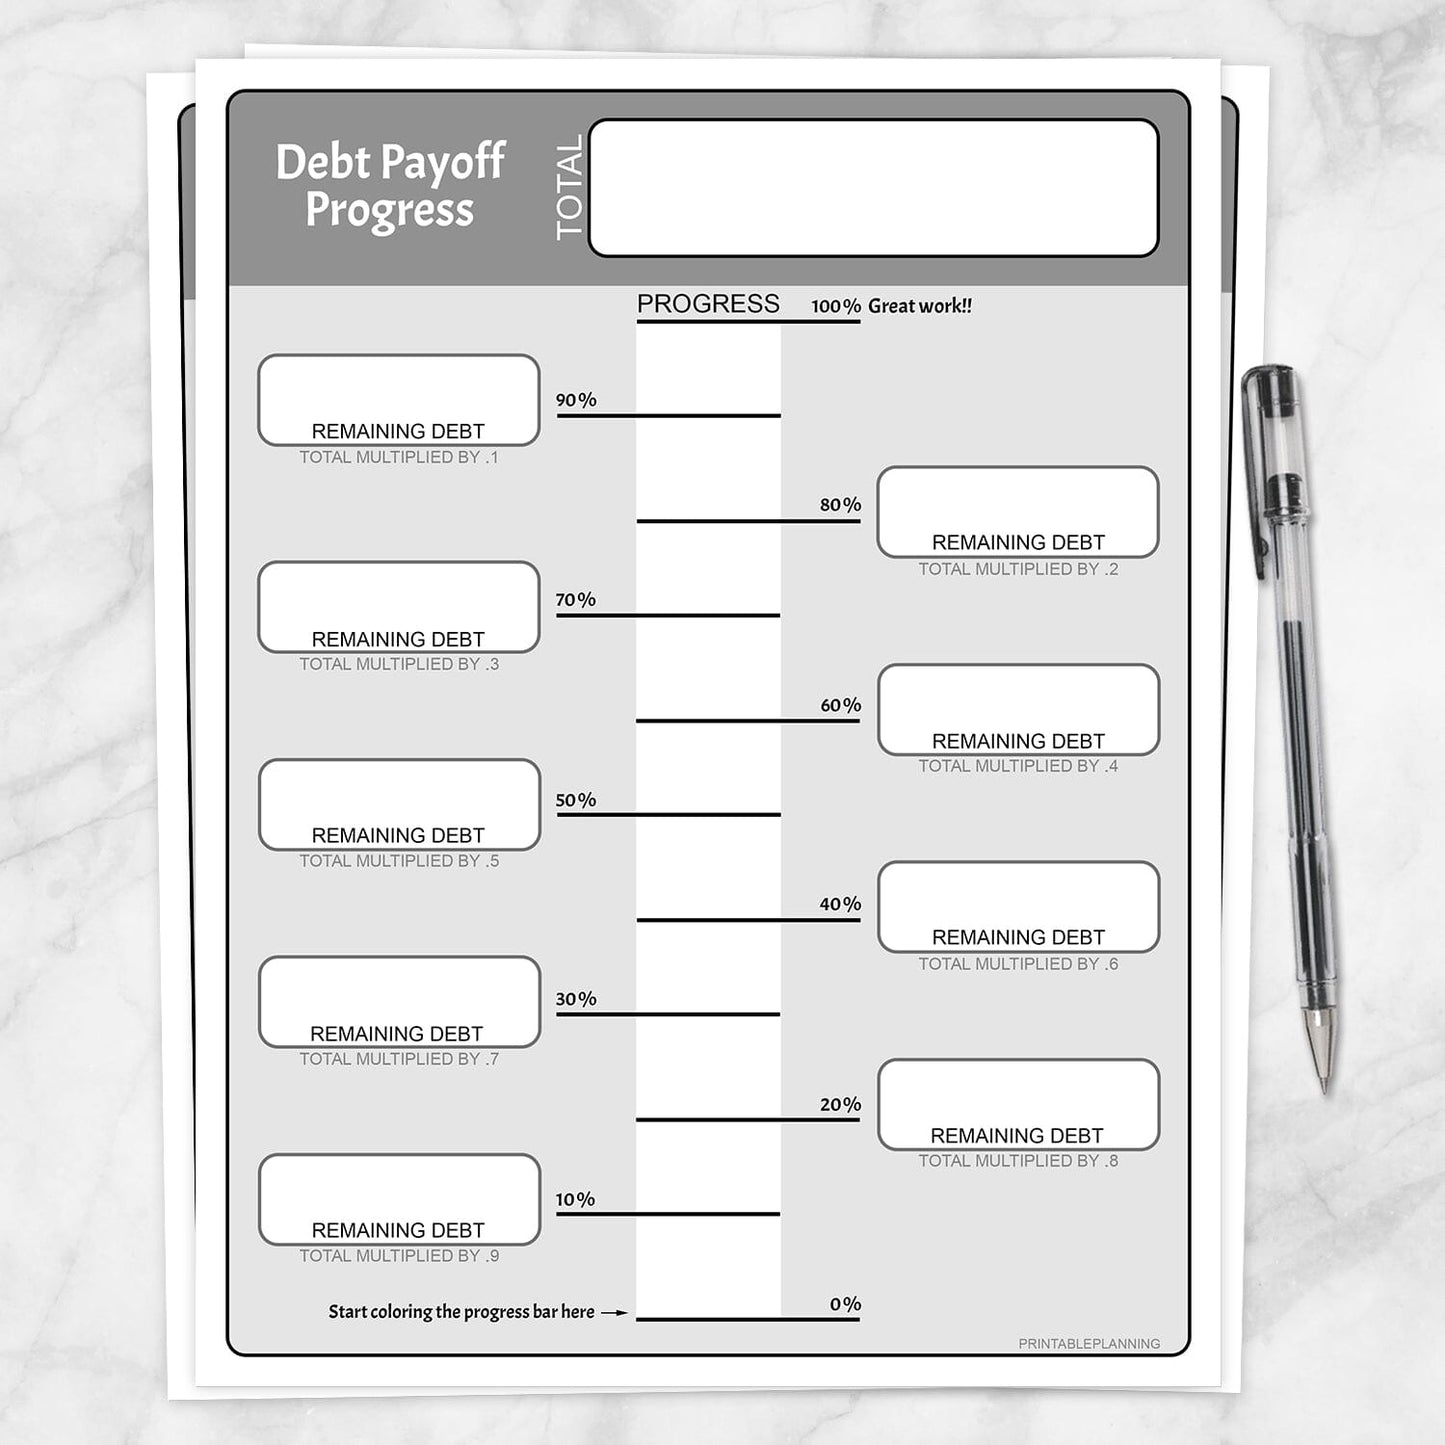 Printable Remaining Debt Payoff Progress Bar (descending) at Printable Planning.